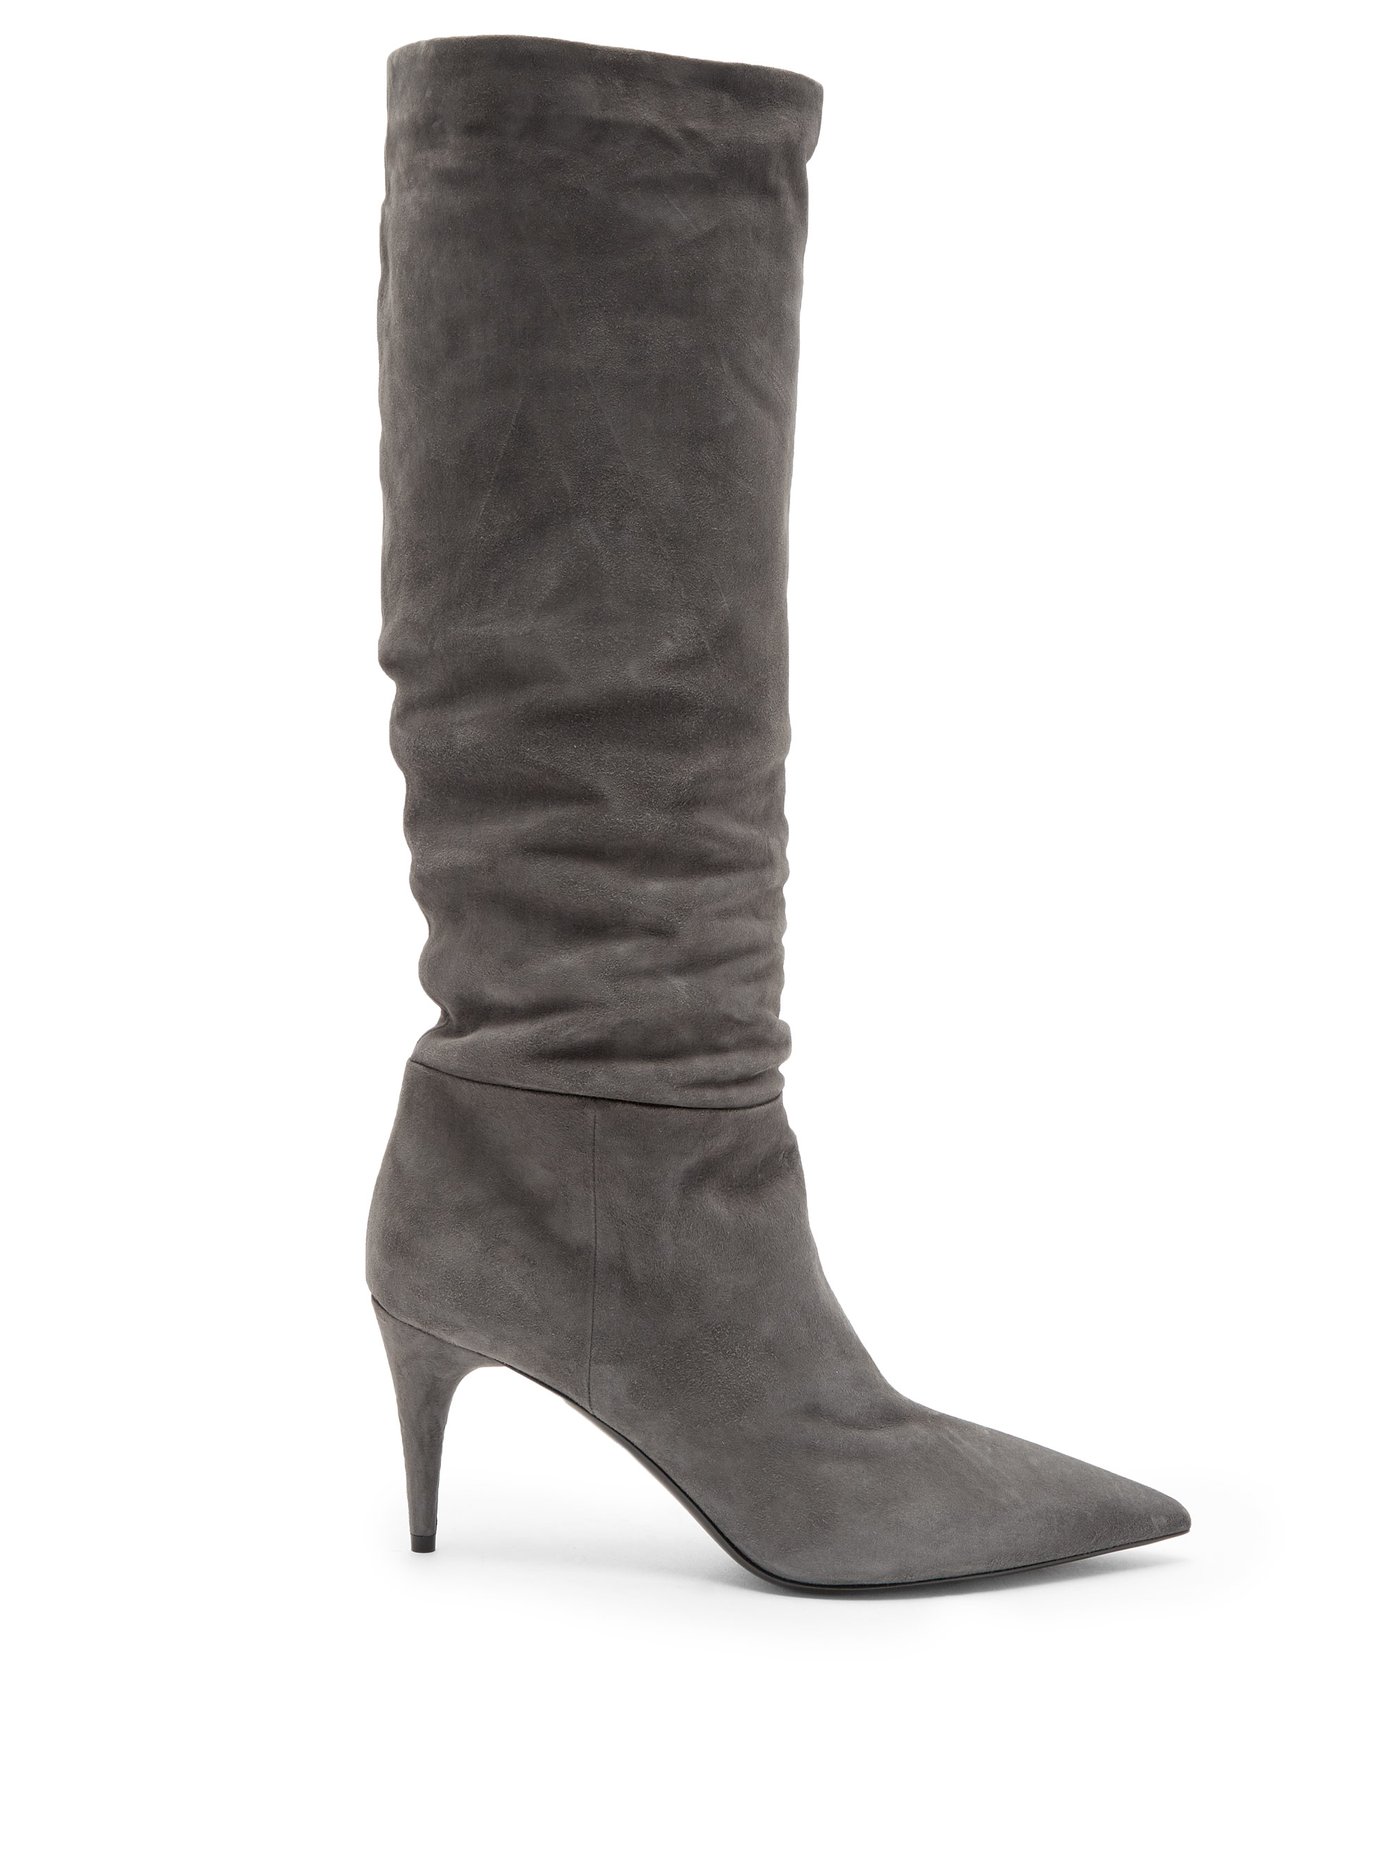 grey suede knee high boots